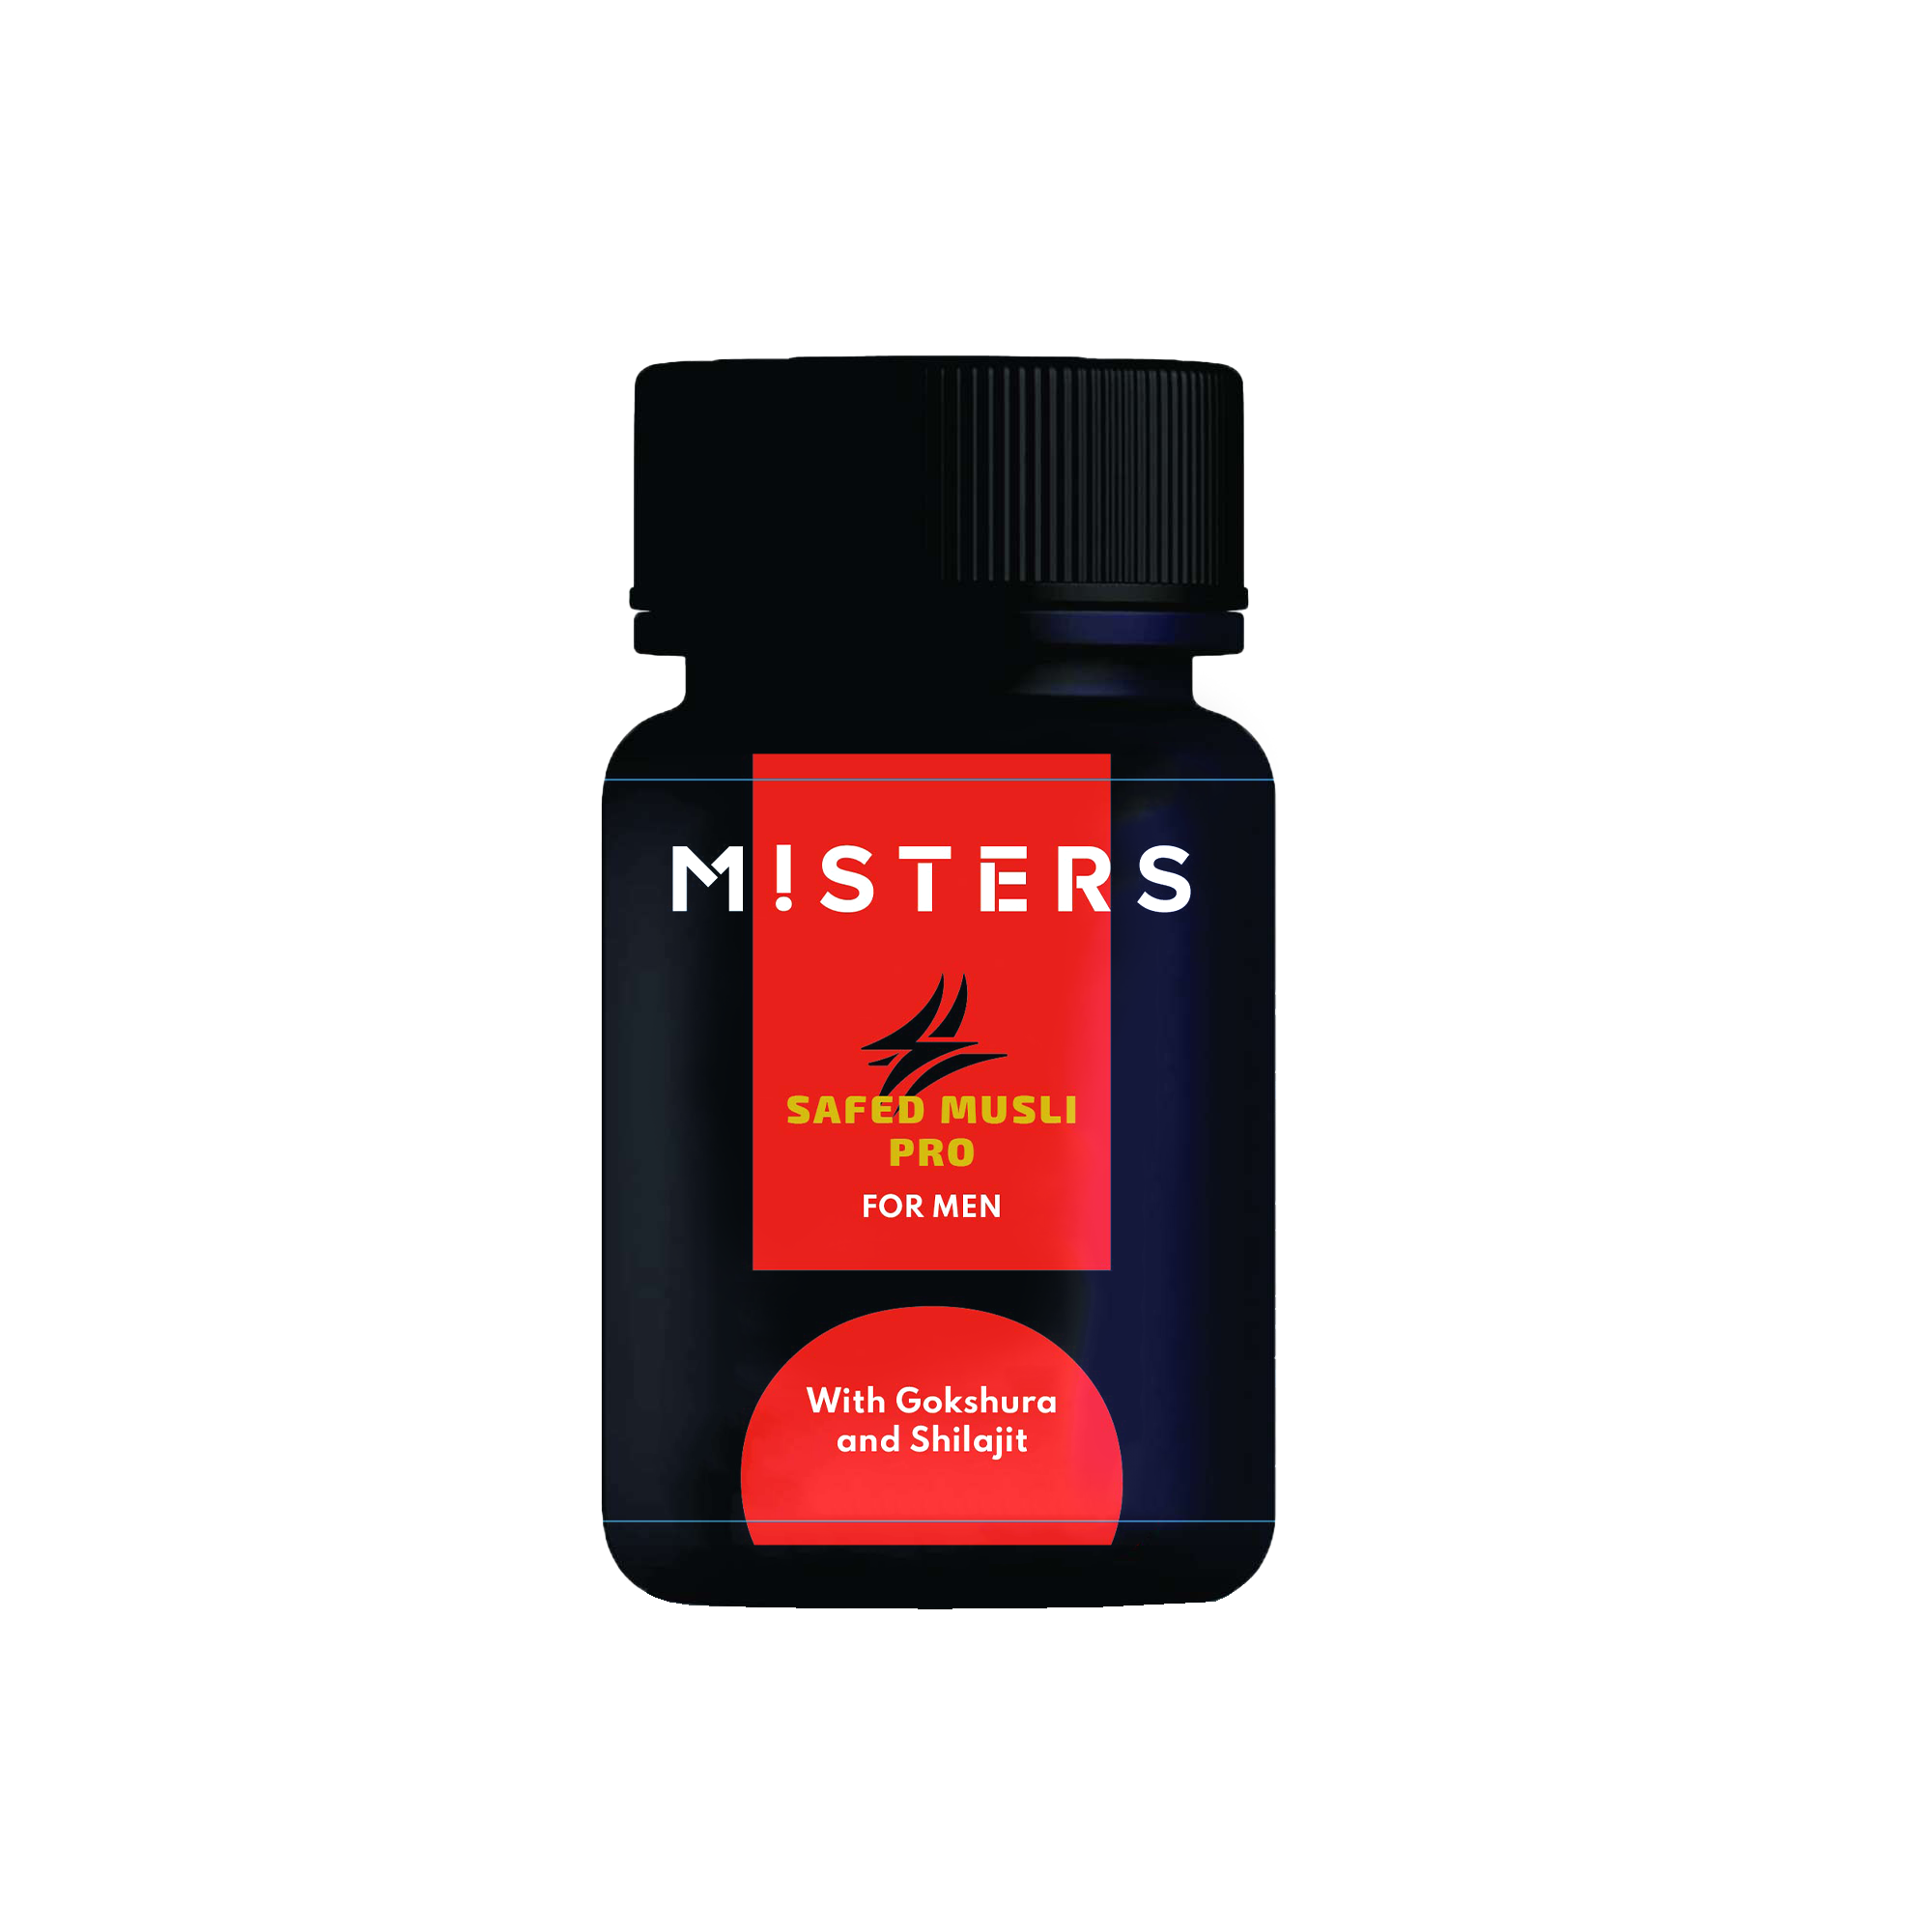 Misters Safed Musli PRO for Men (60 capsules)